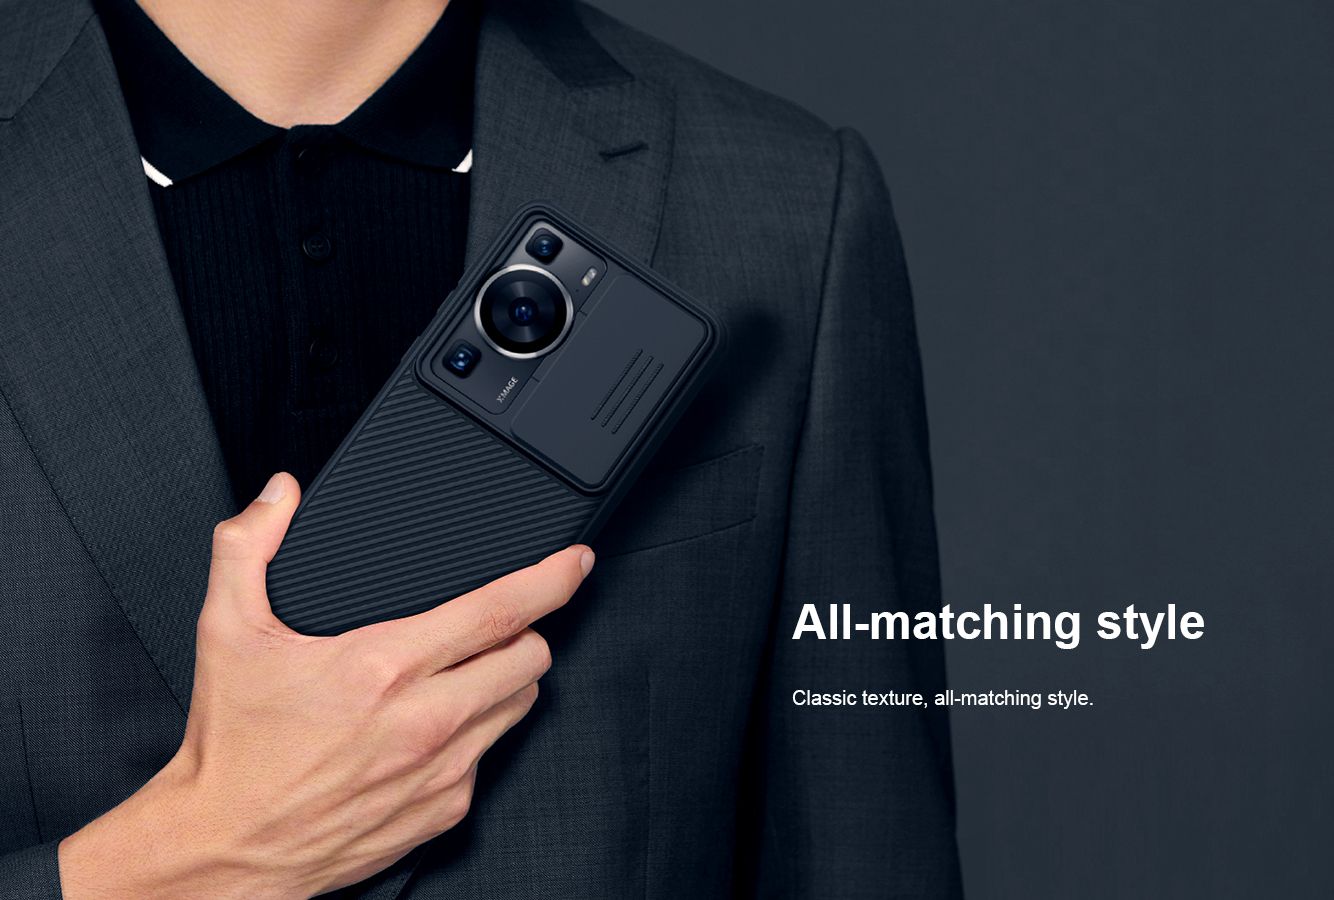 Huawei P60 Pro Nillkin CamShield Pro Case